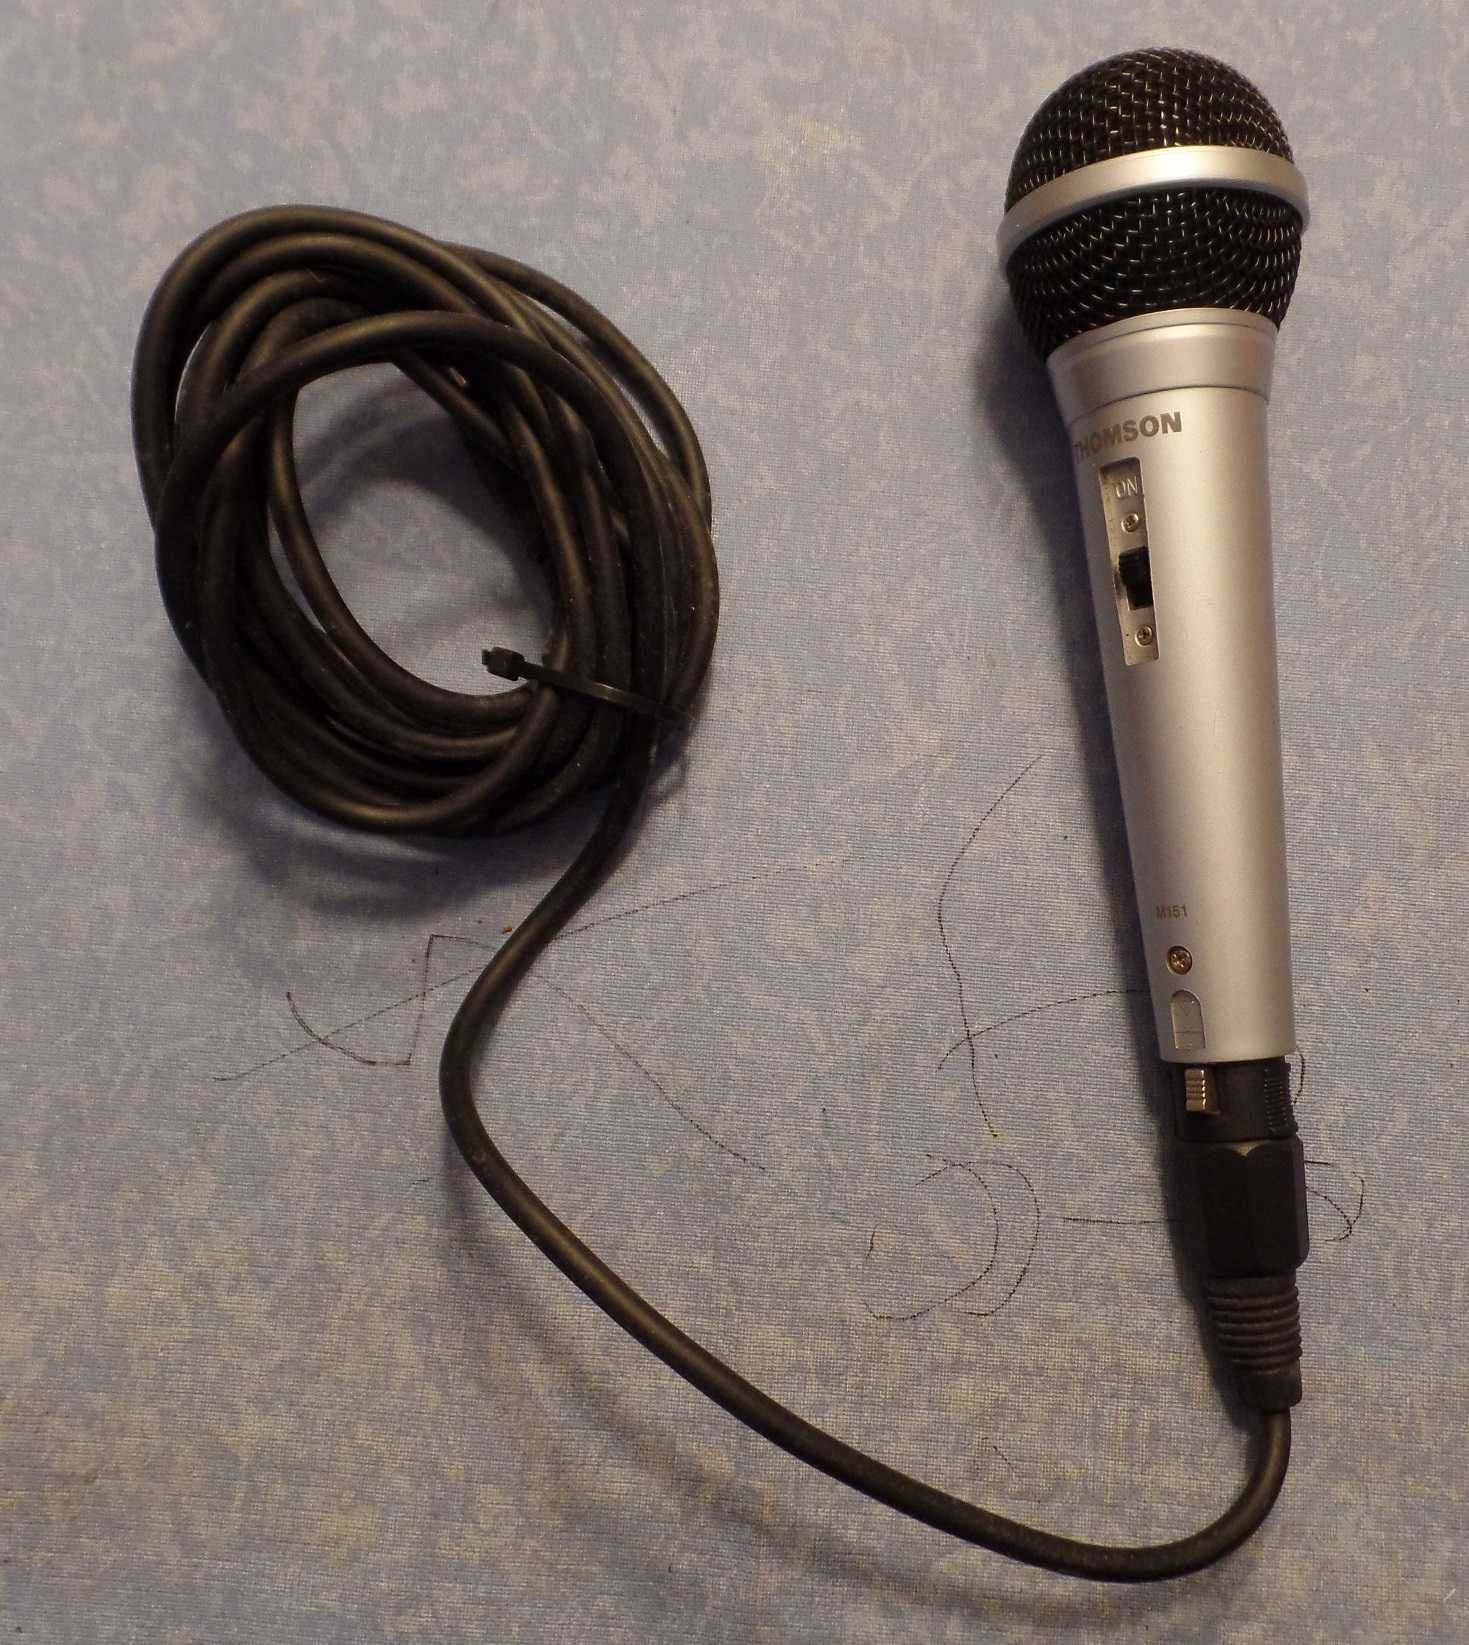 Microfone Thomson M151 (891)